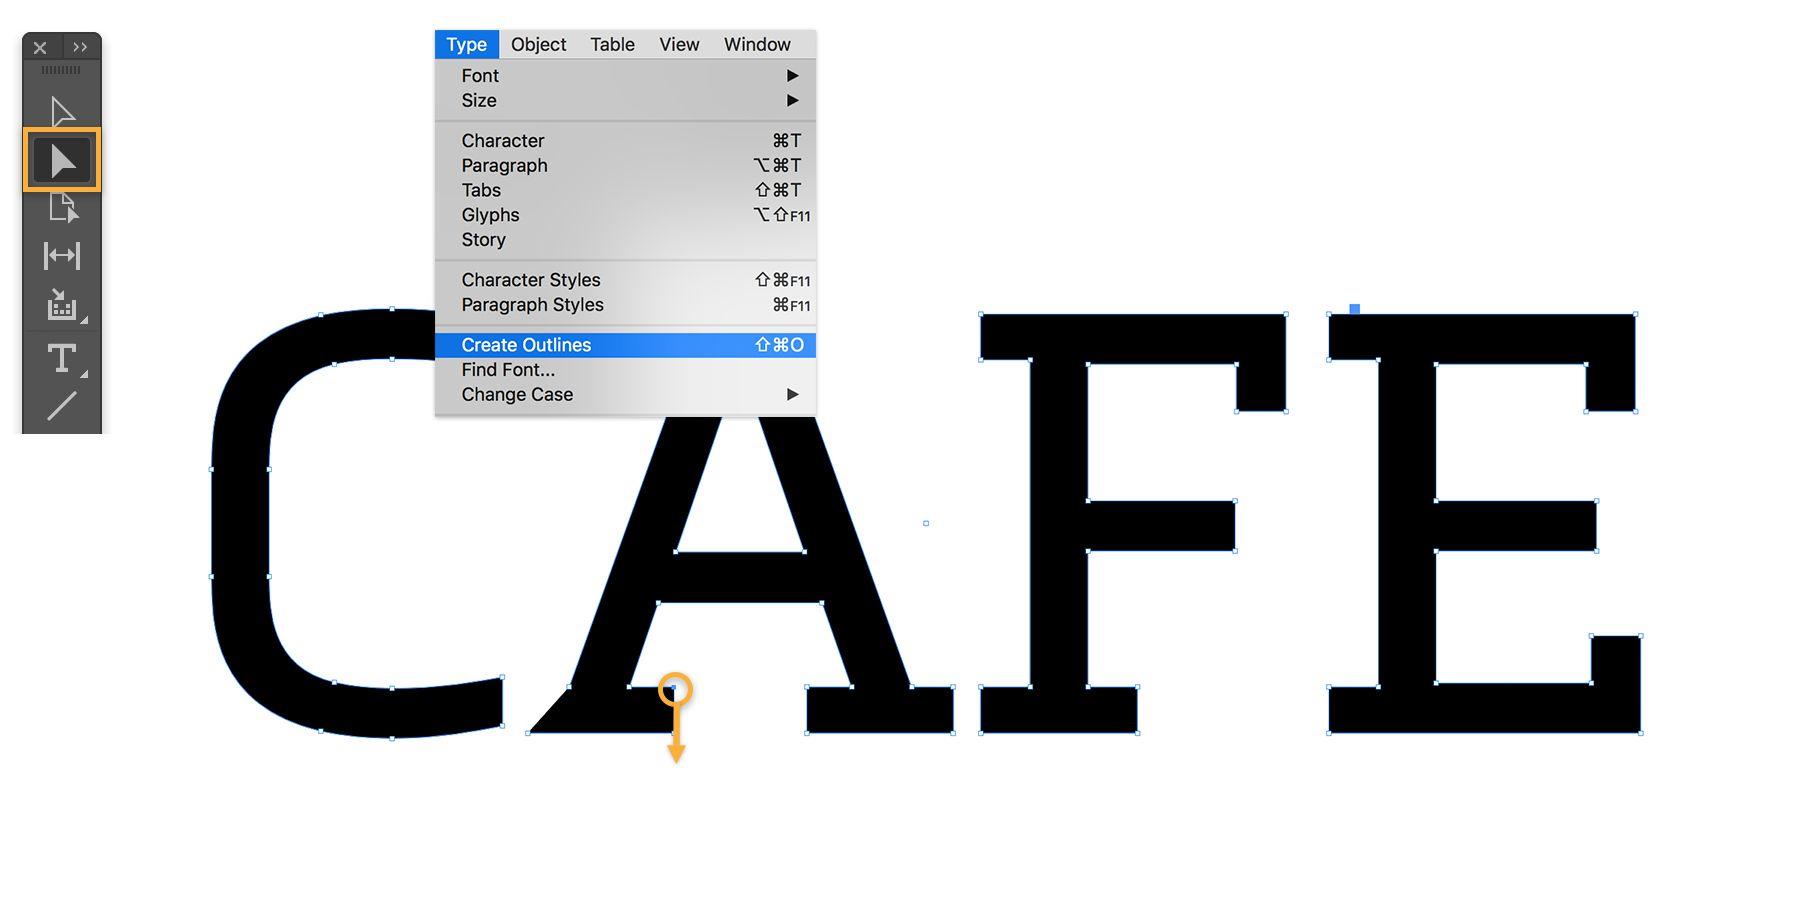 Object Logo - Design a wordmark logo | Adobe InDesign tutorials